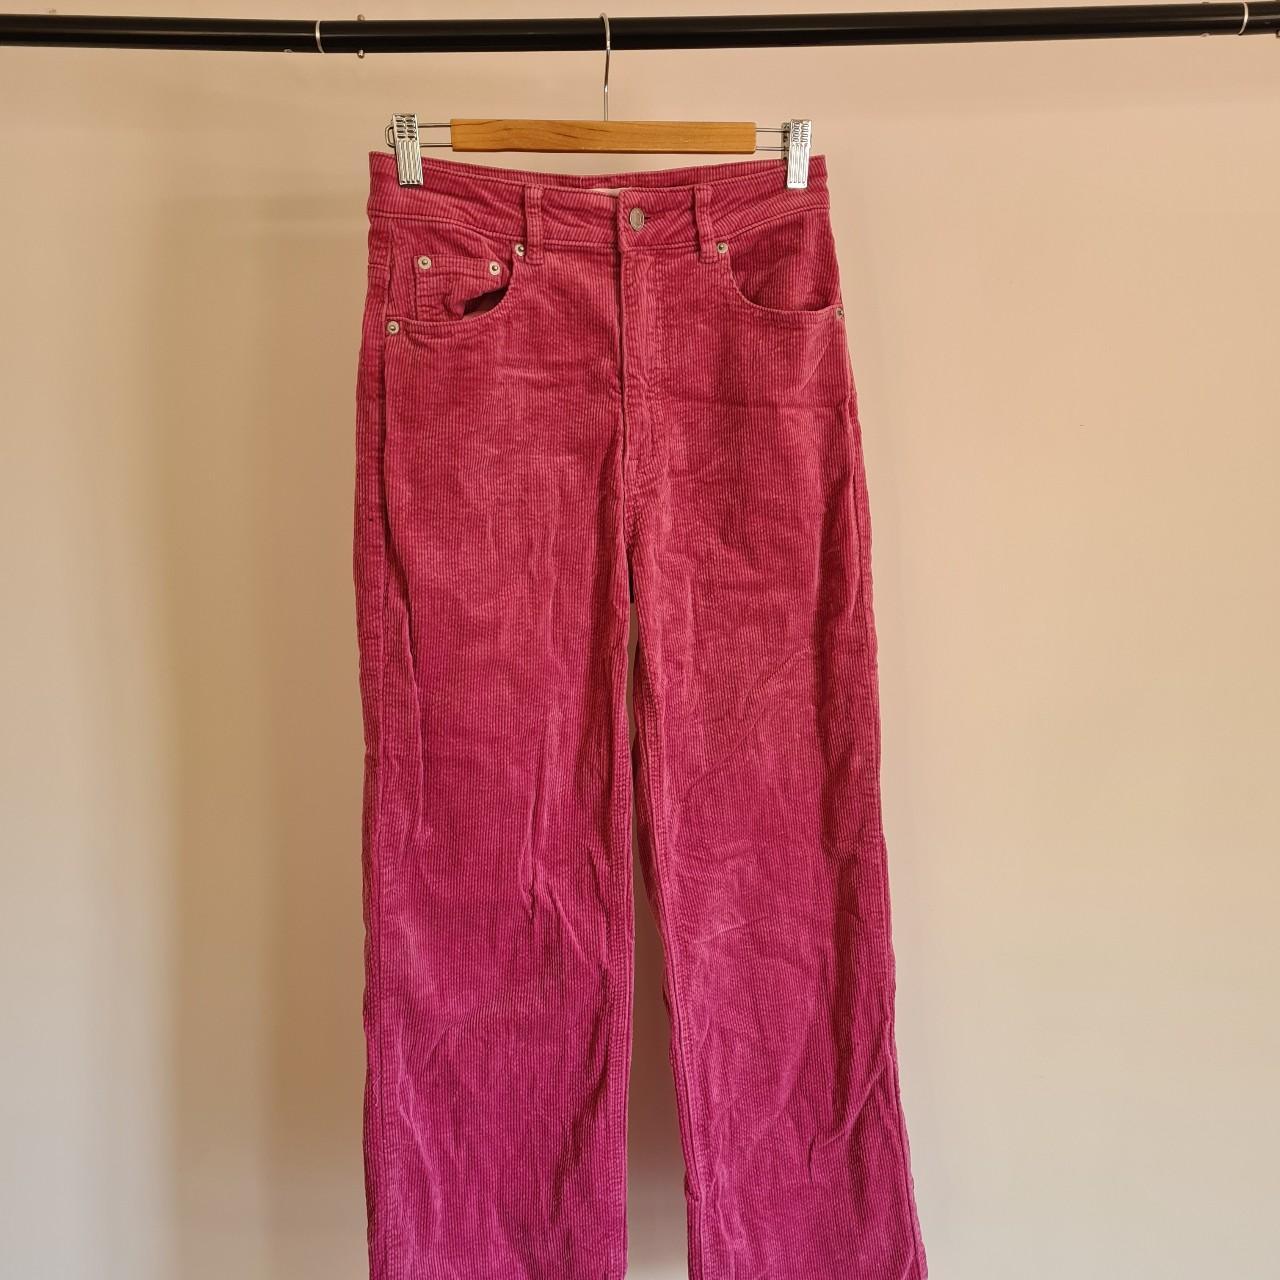 Glassons pink corduroy wide leg pants. High... - Depop